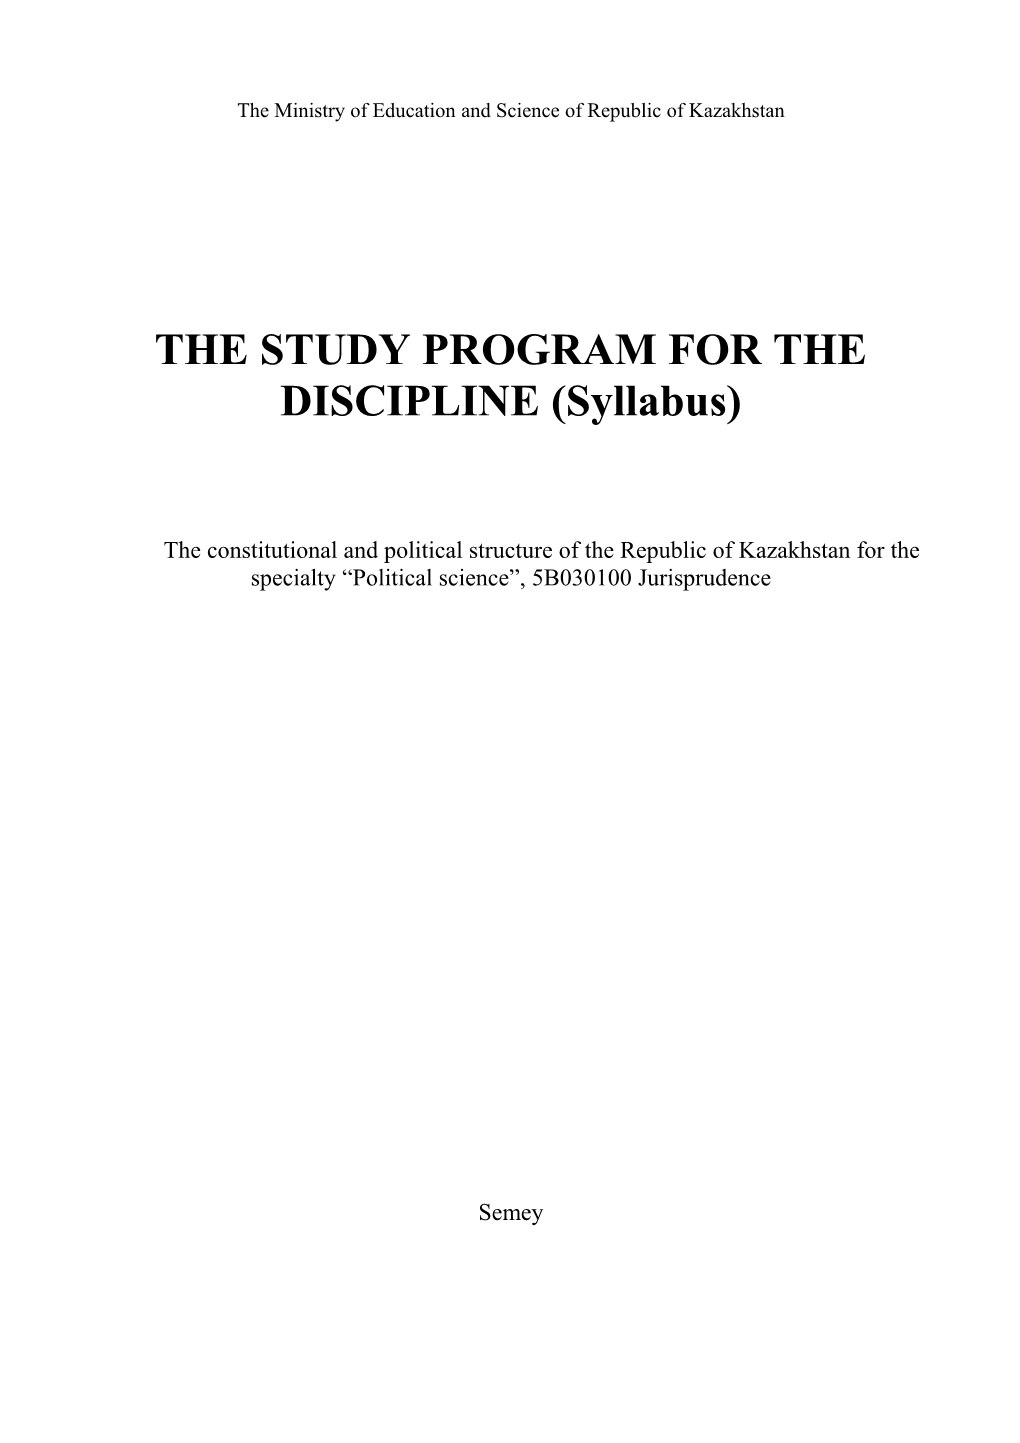 THE STUDYPROGRAM for the DISCIPLINE (Syllabus)